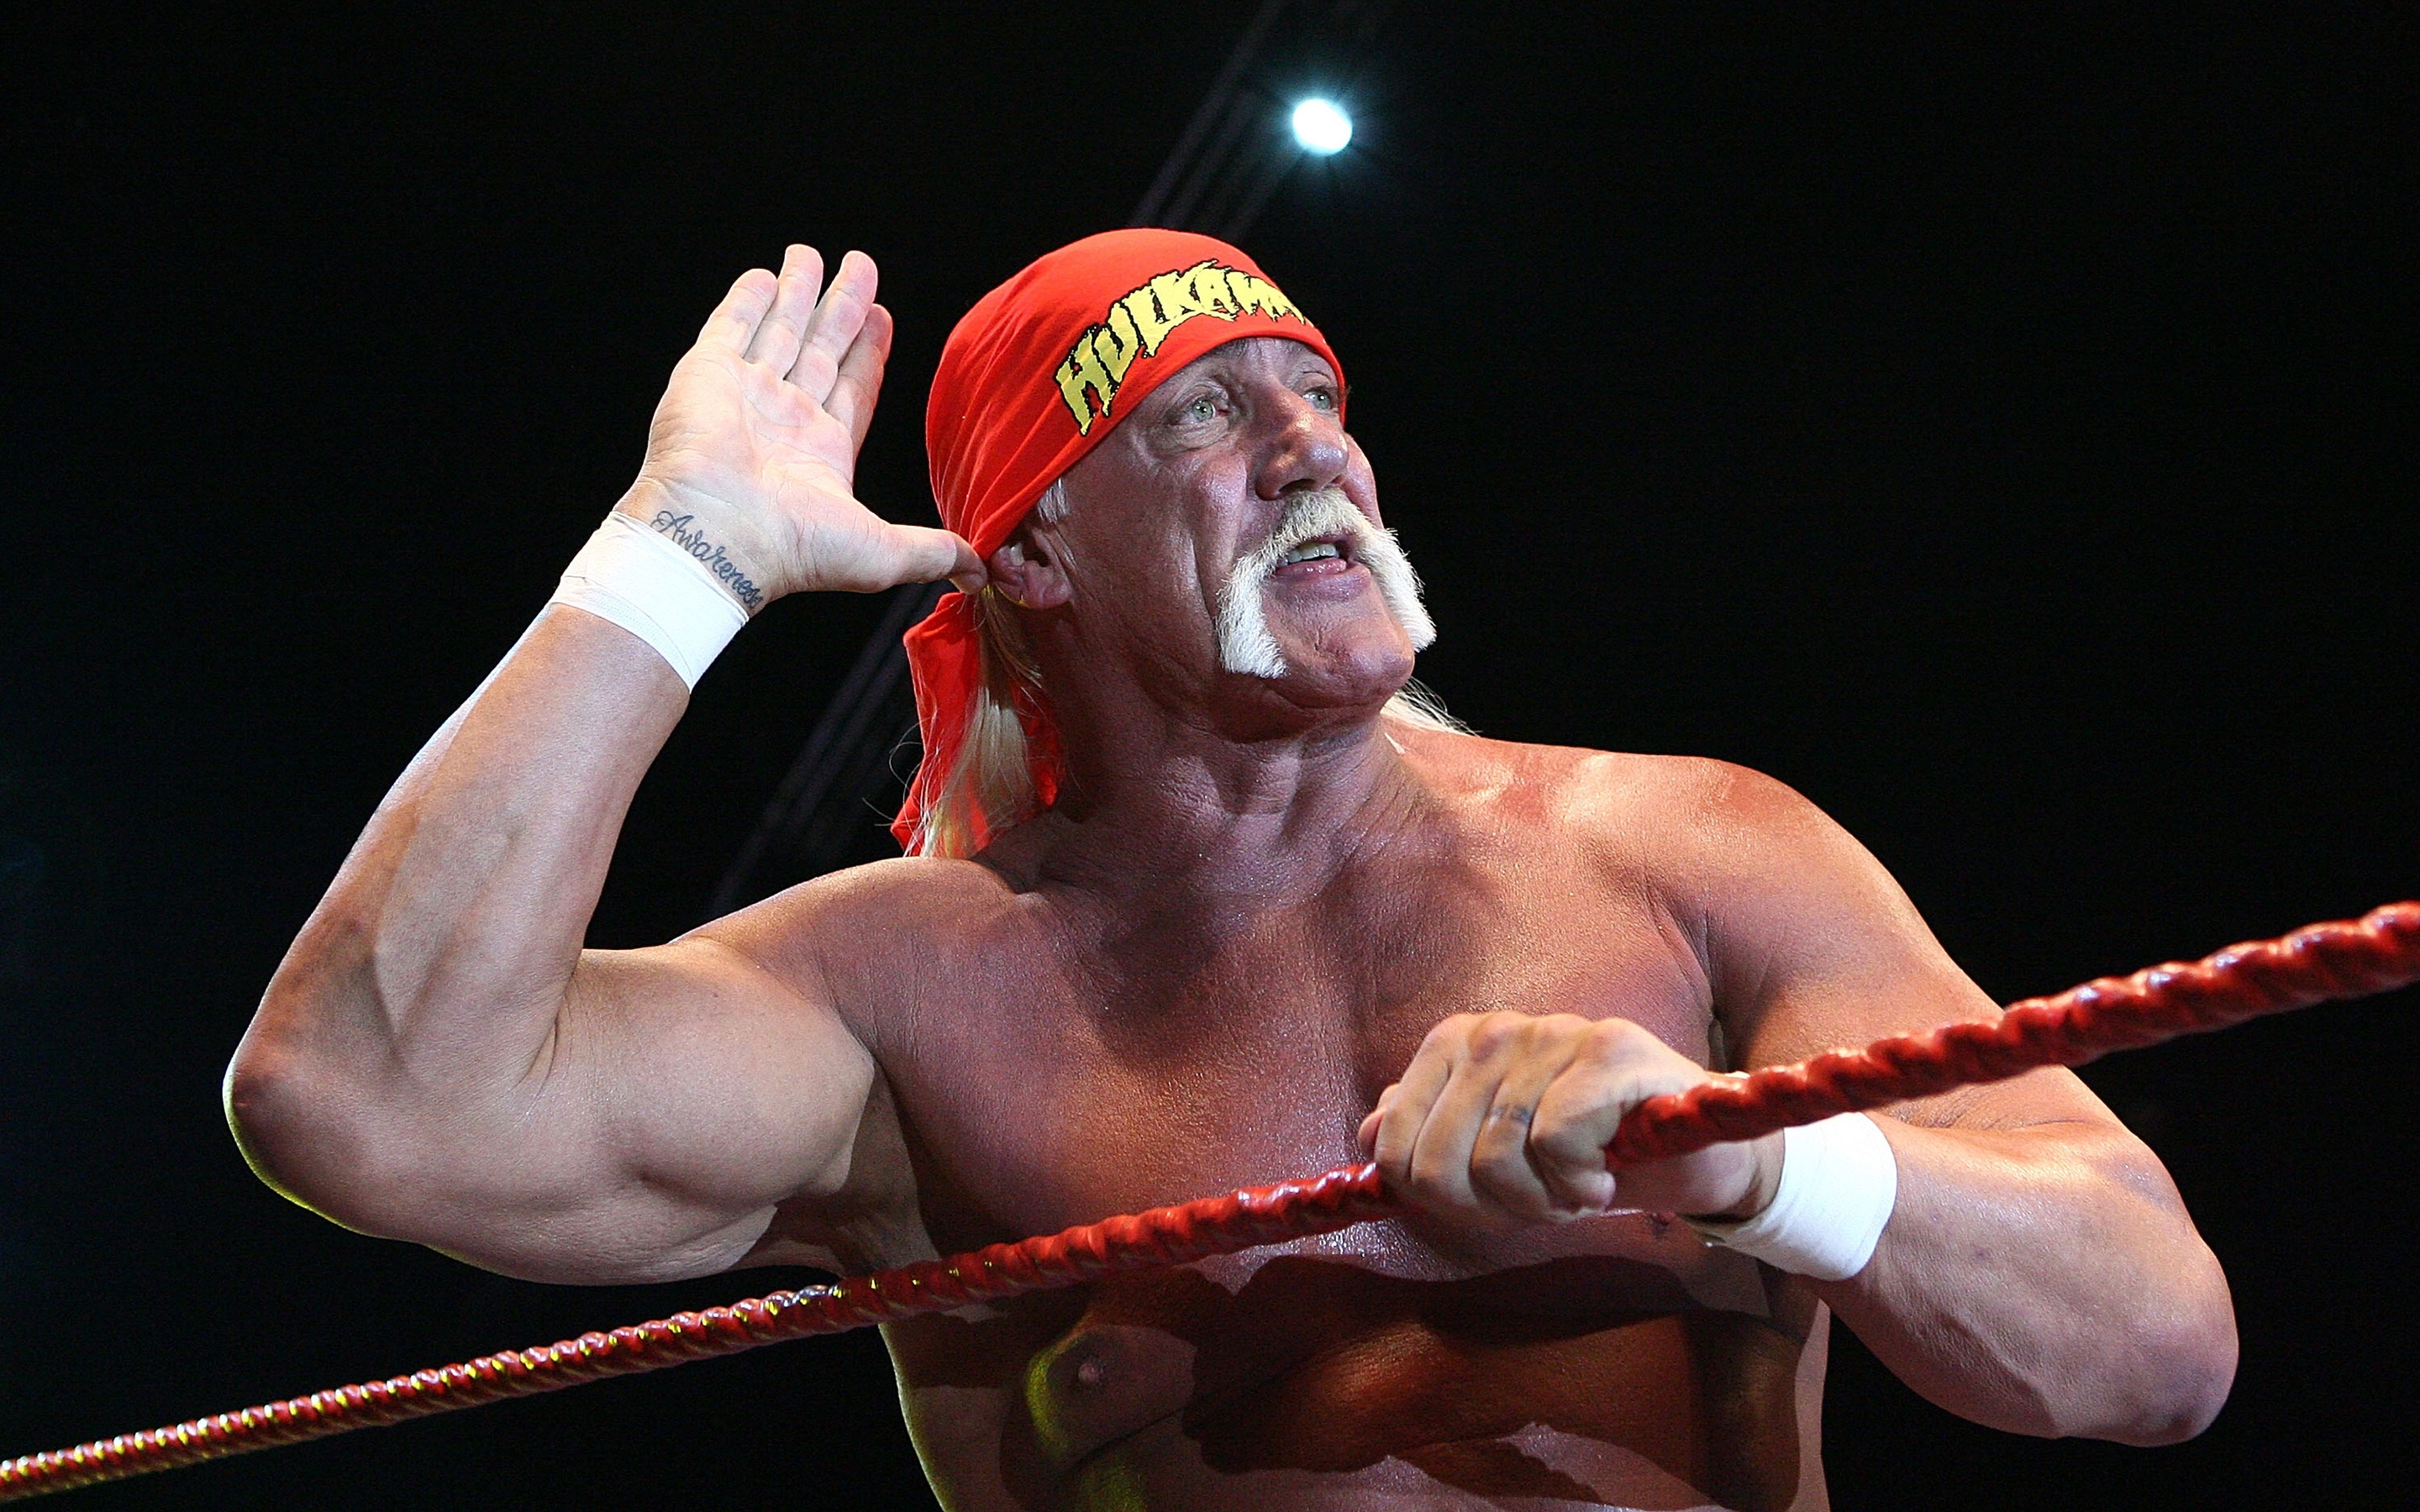 Hulk Hogan Salute for 2880 x 1800 Retina Display resolution